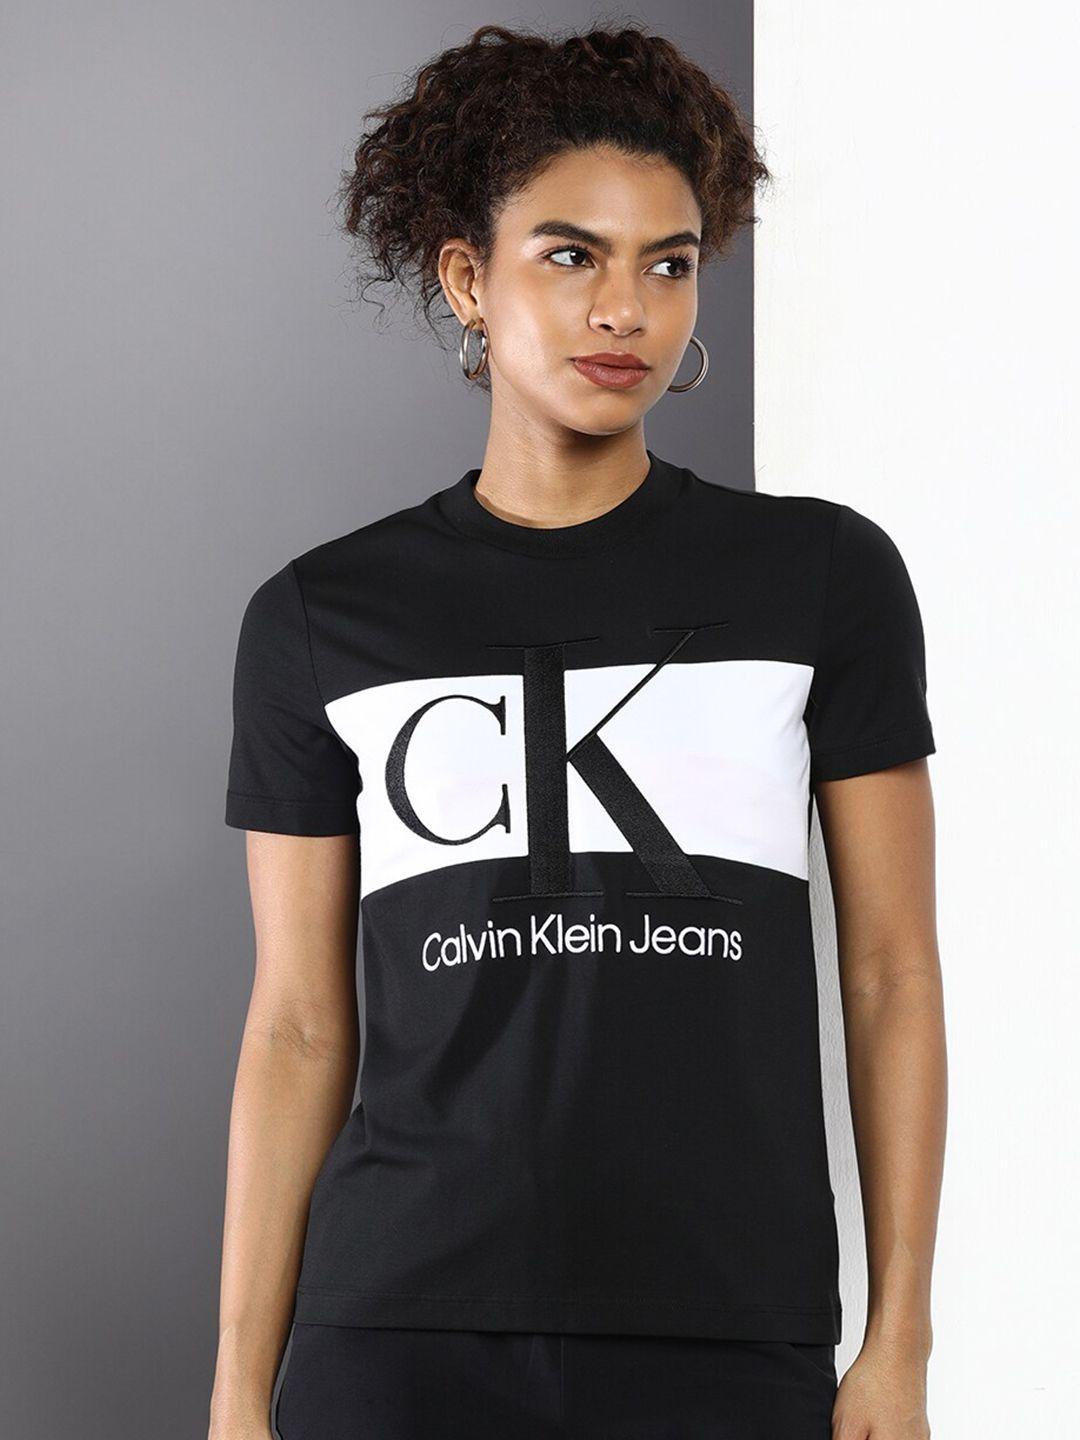 calvin klein jeans women round neck typography printed t-shirt